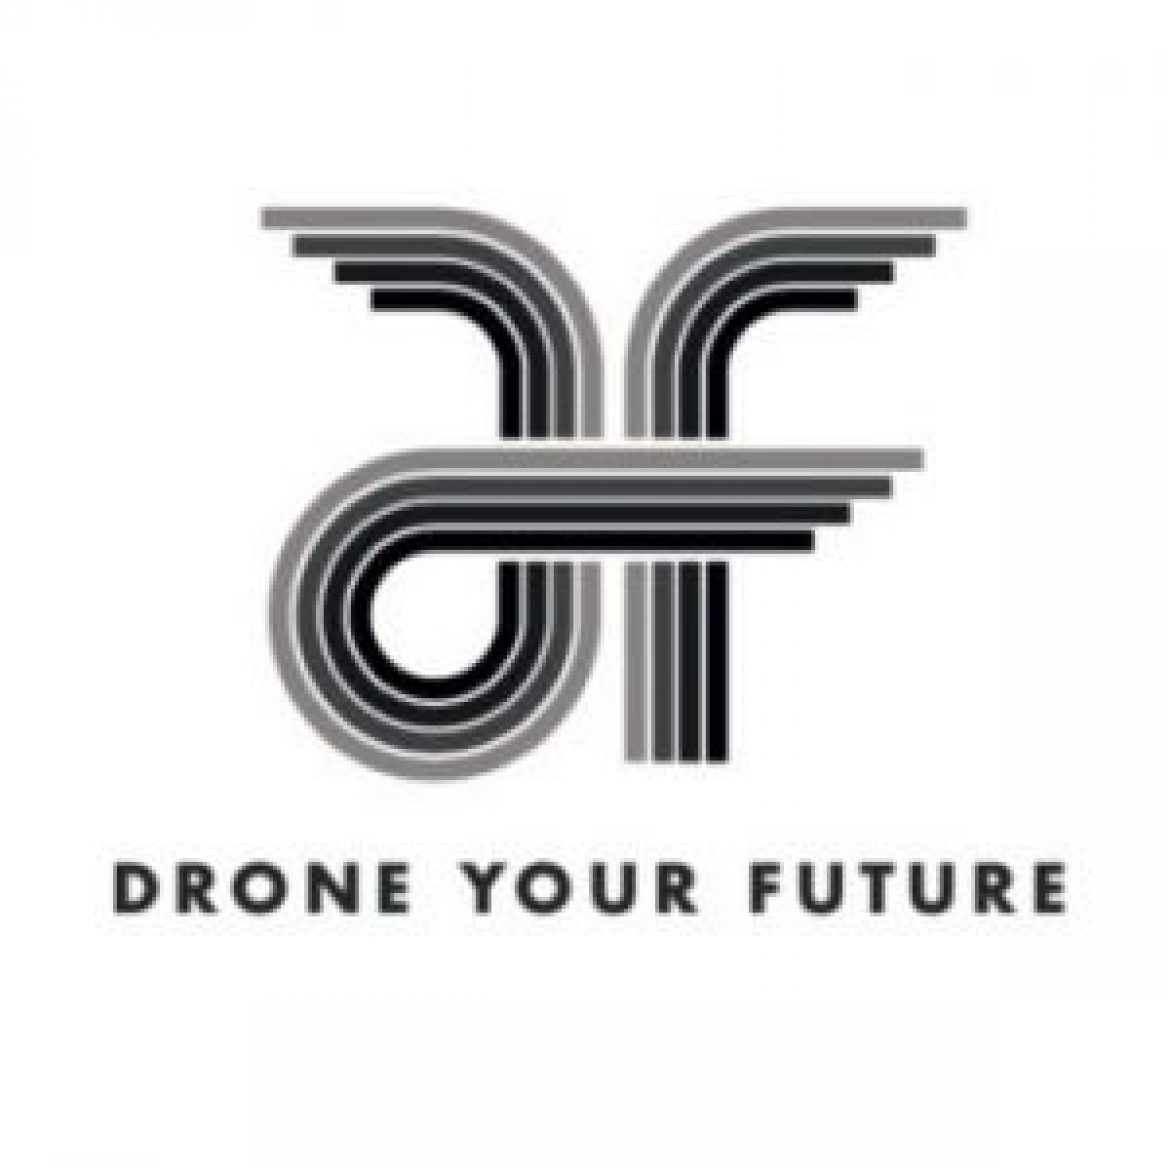 Drone your future